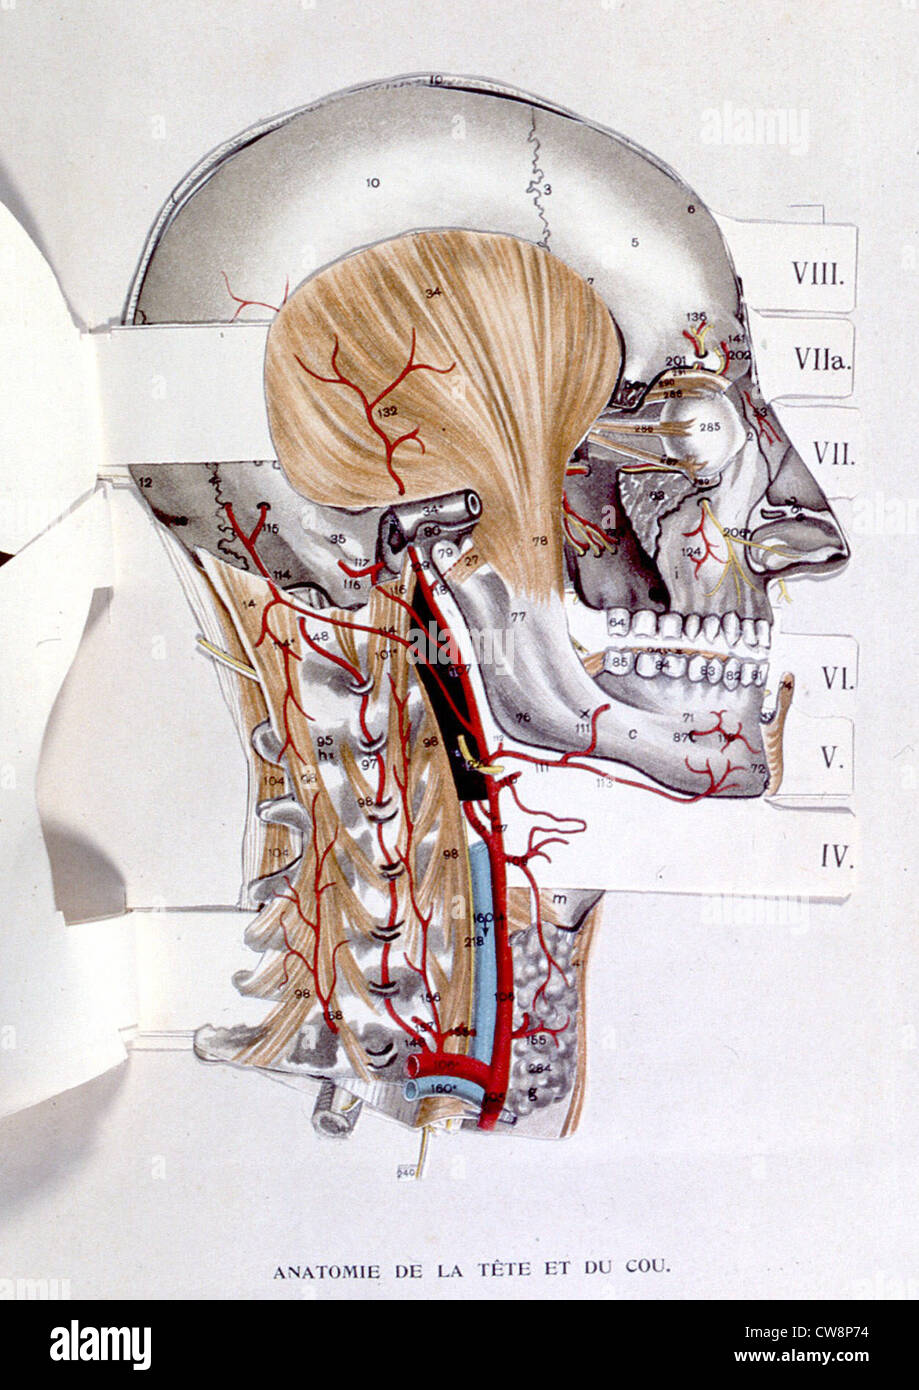 Anatomie de la tête en 10 illustrations